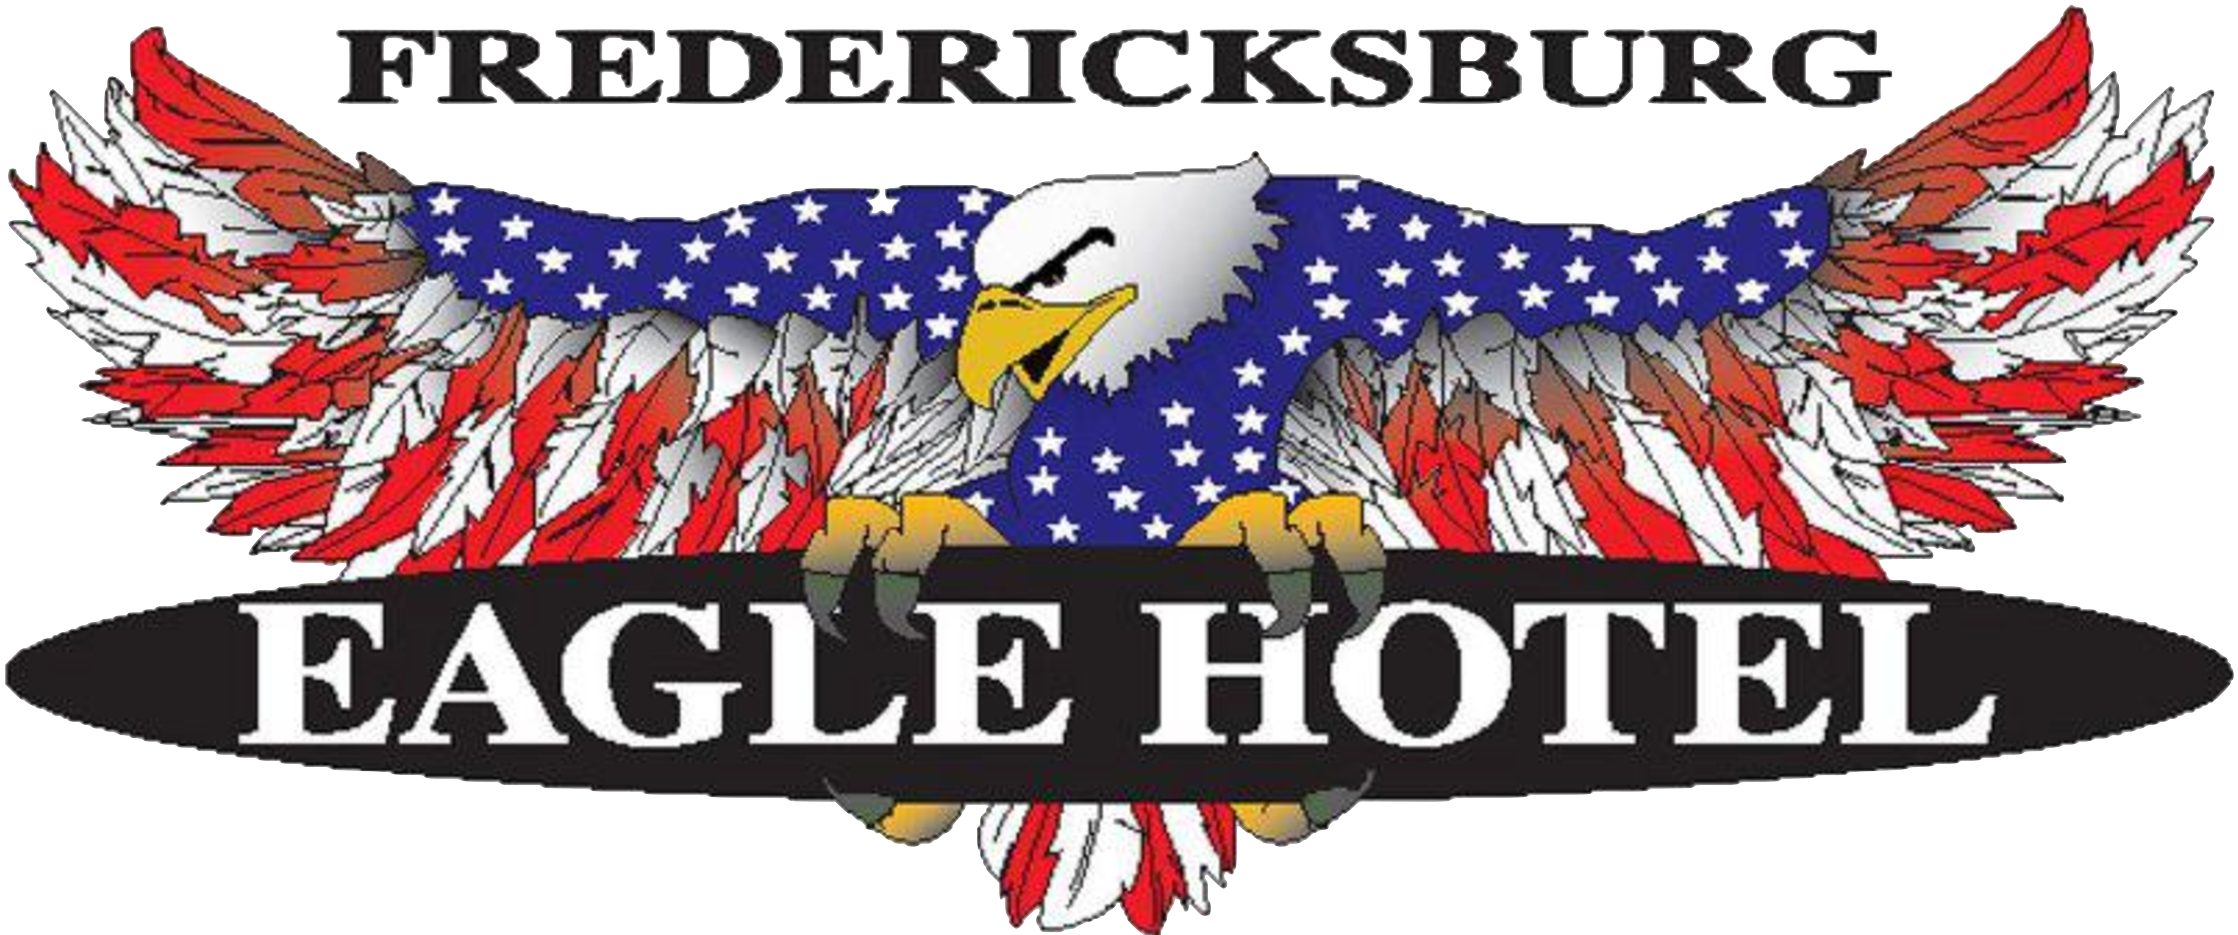 Fredericksburg Eagle Hotel Home